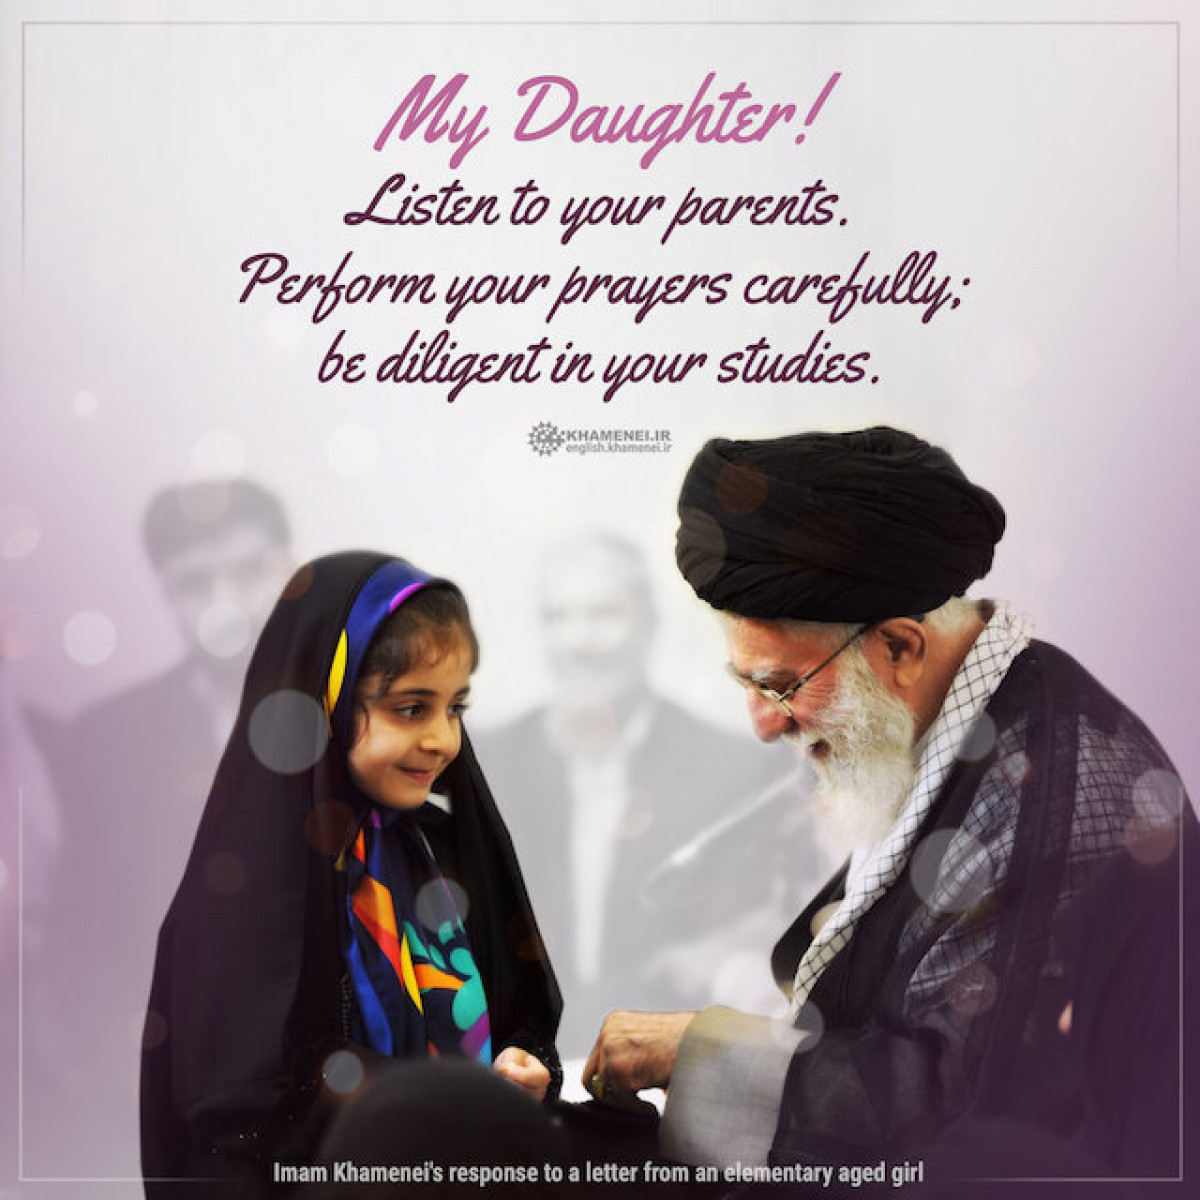 Imam Khamenei's response to a letter from an elementary aged girl